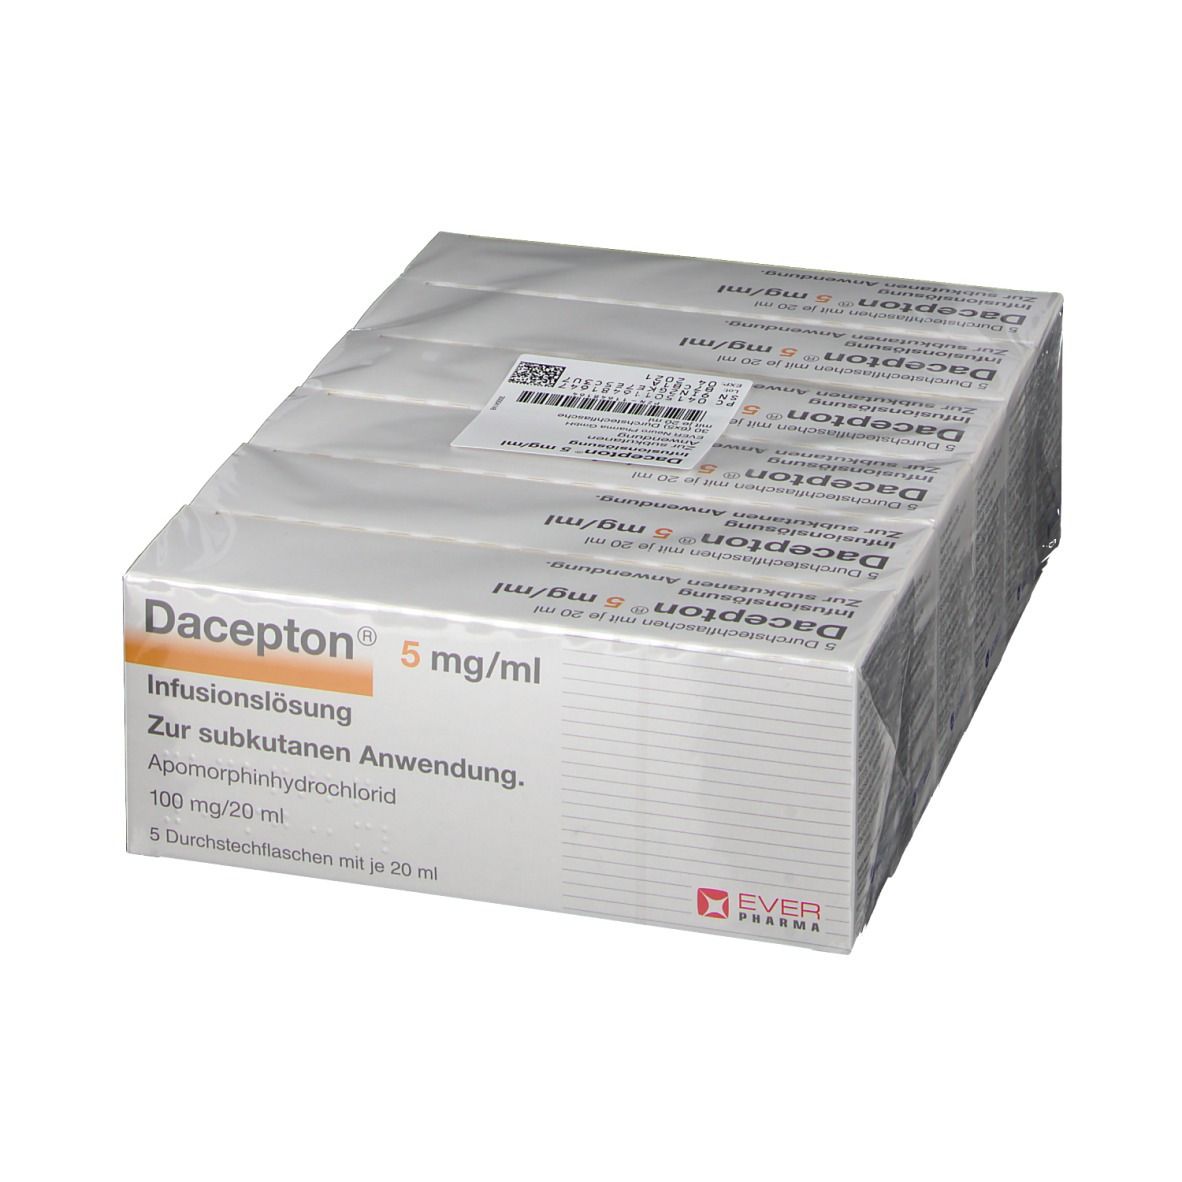 Dacepton® 5 mg/ml